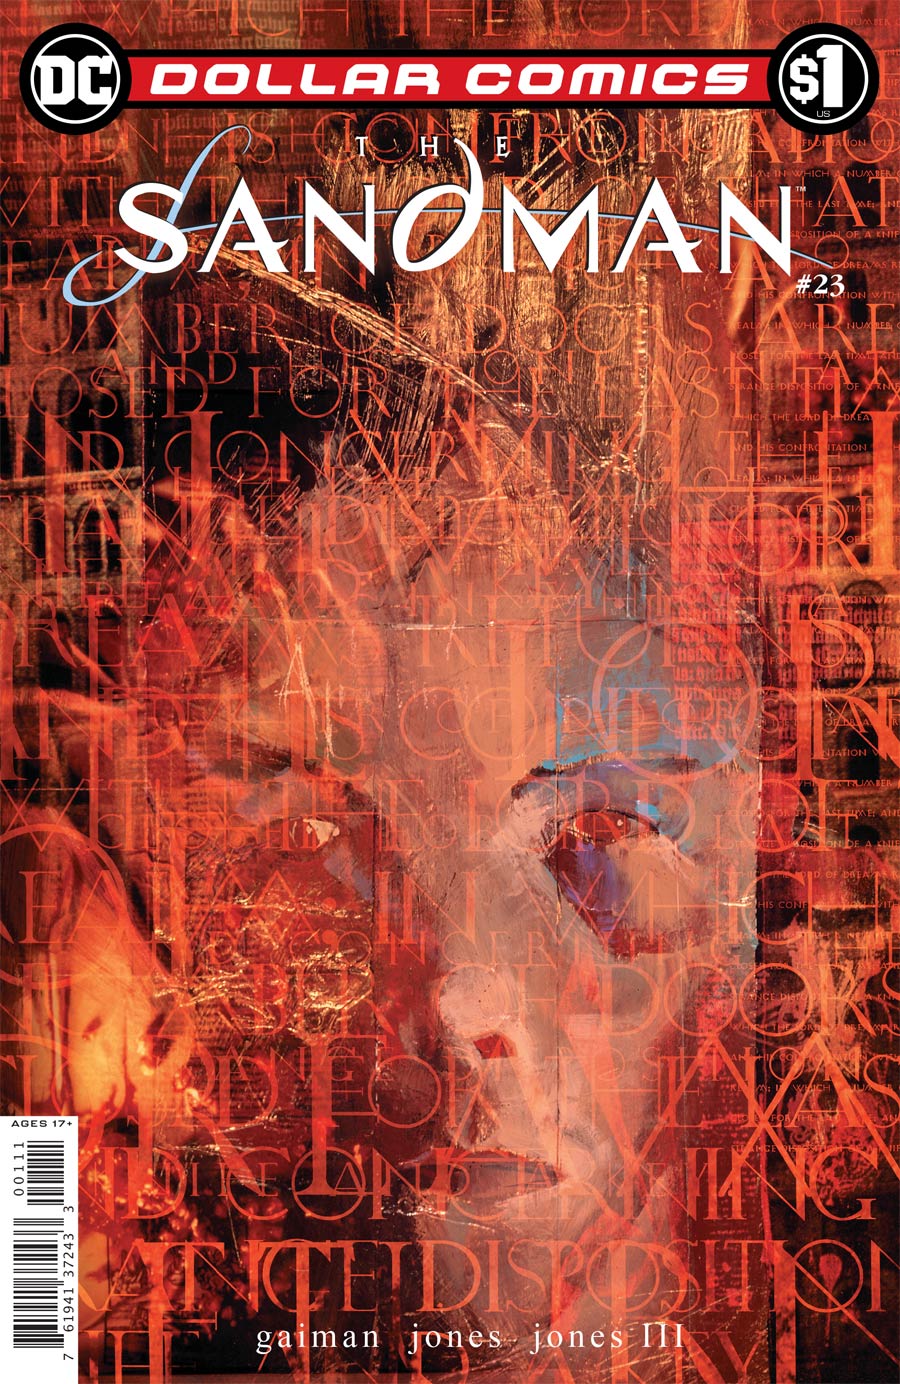 Dollar Comics The Sandman Vol 2 #23